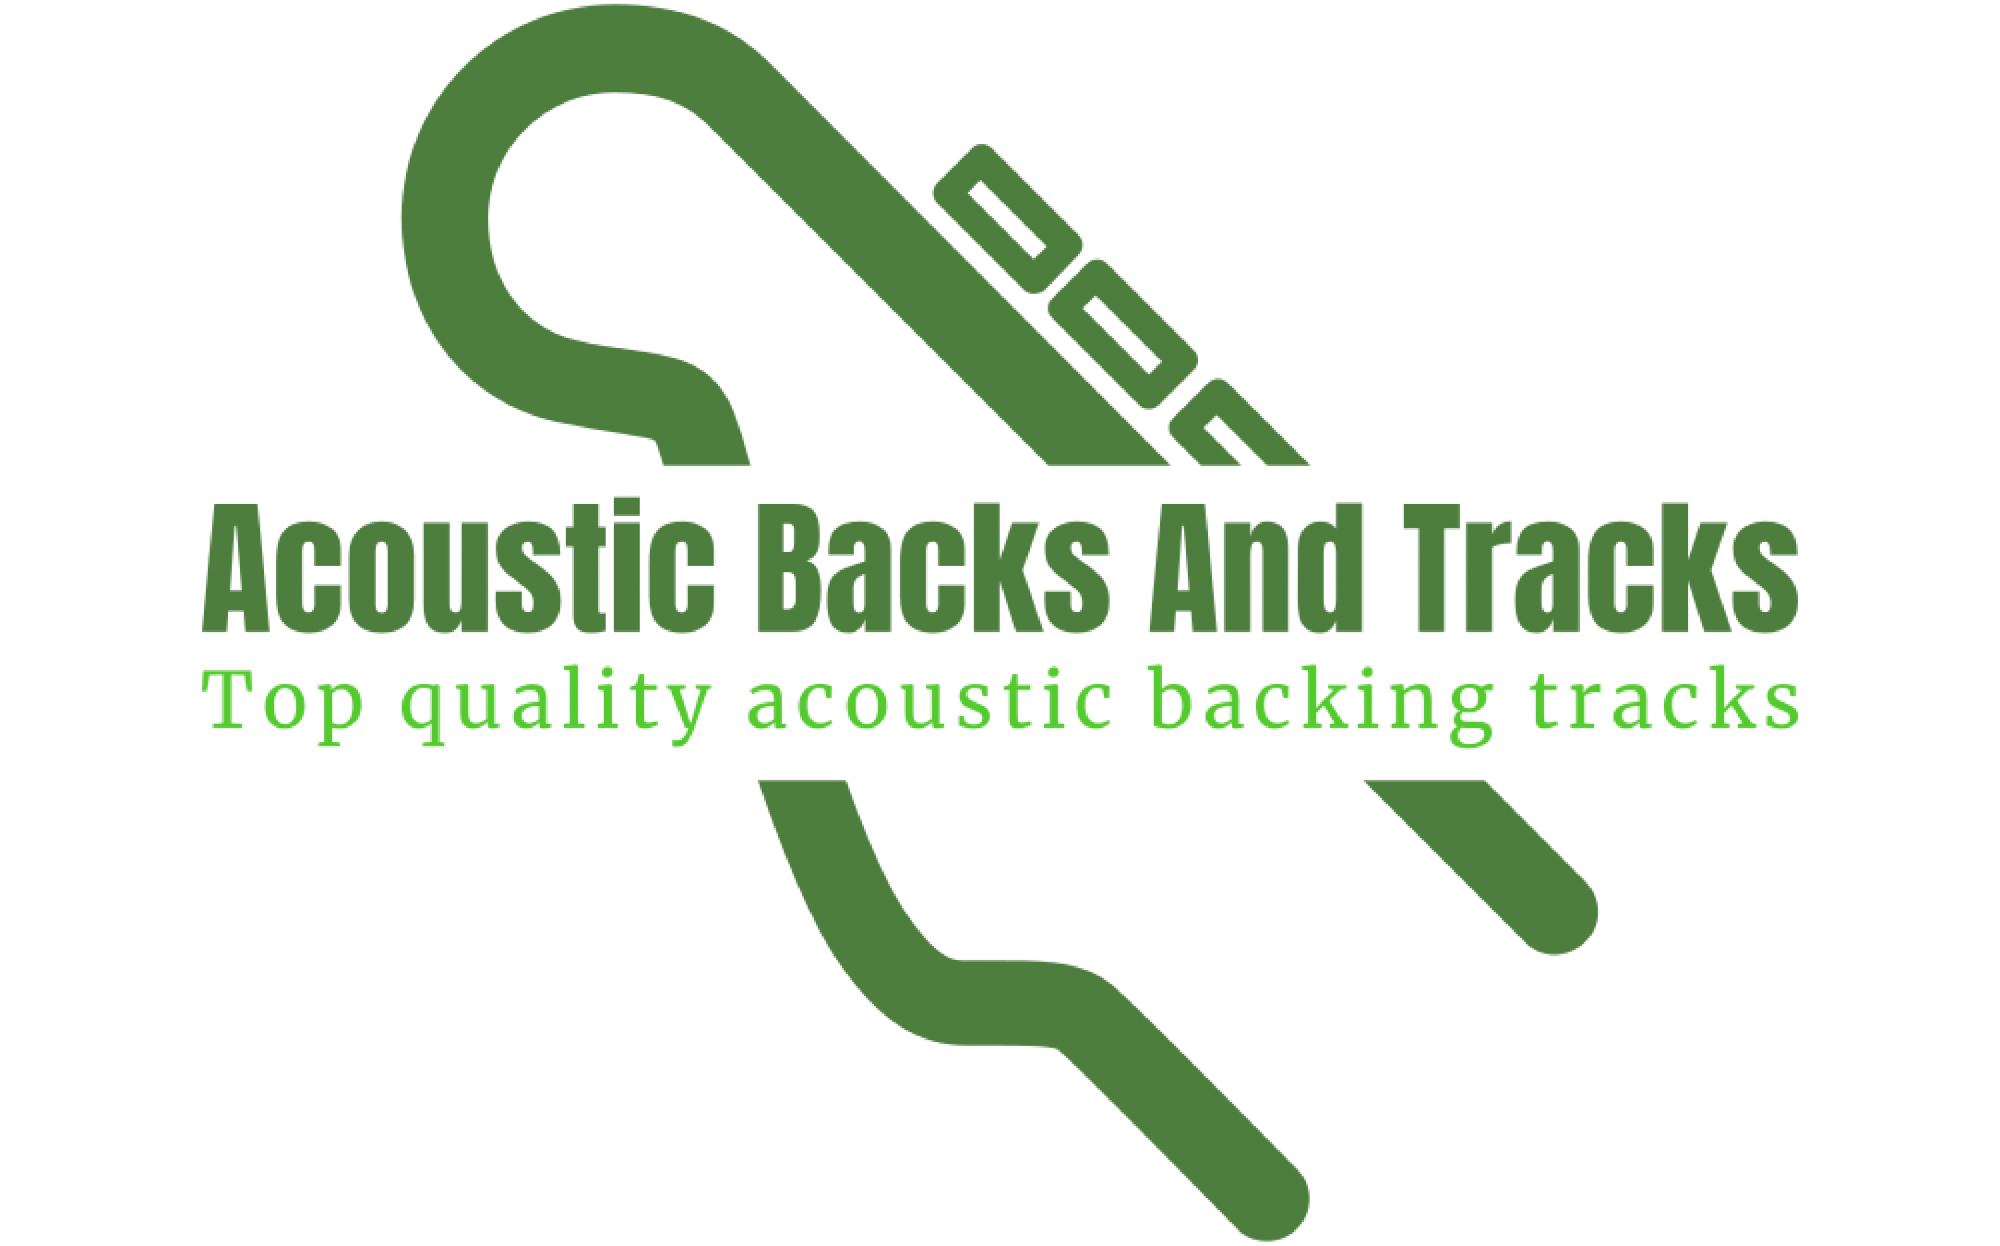 acoustic_backs_and_tracks_logo.png